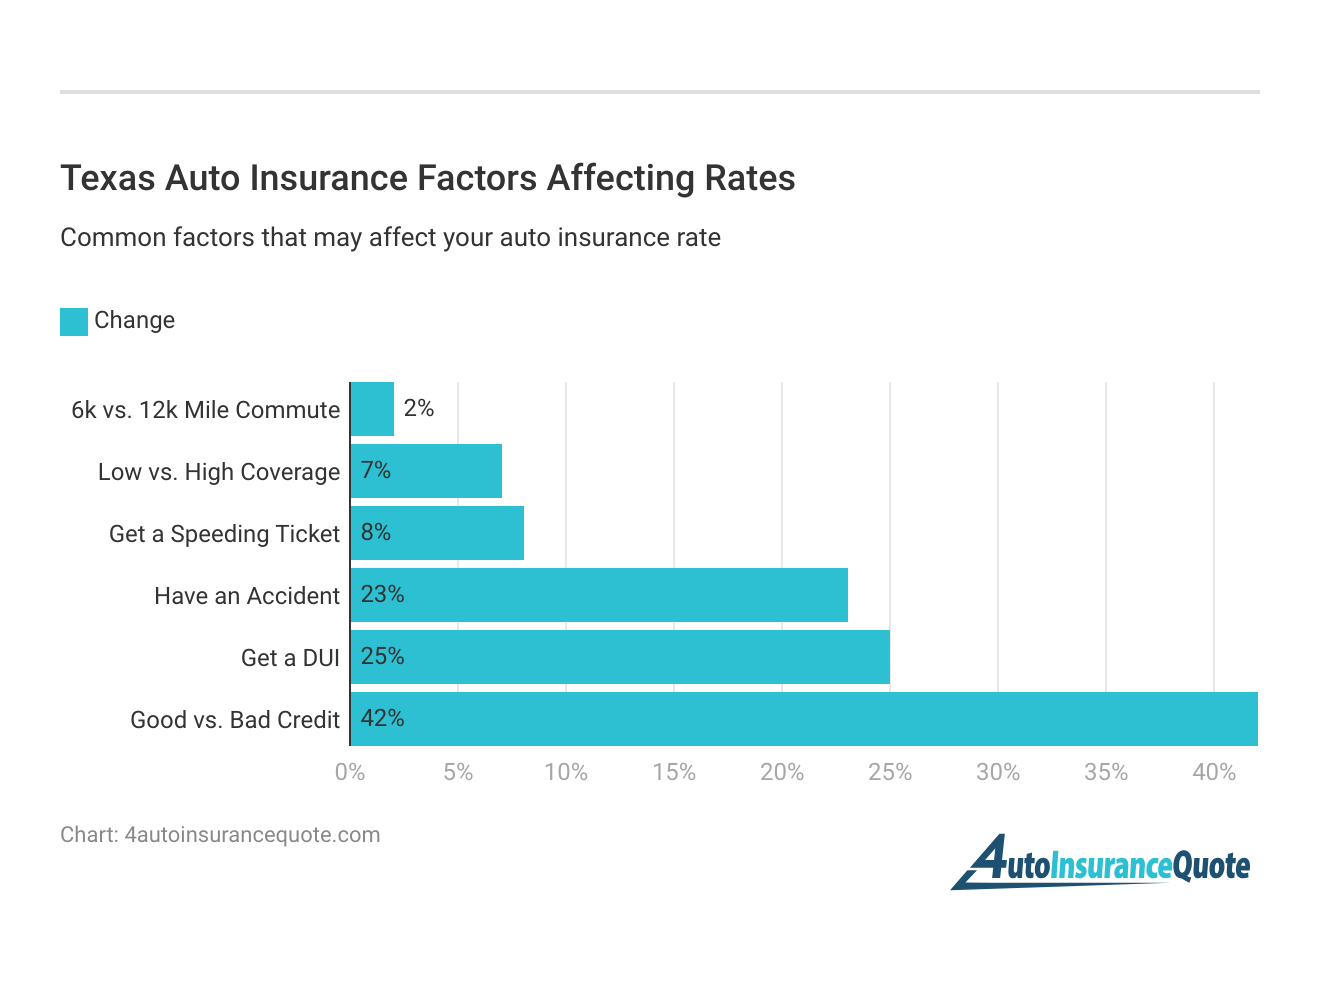 <h3>Texas Auto Insurance Factors Affecting Rates</h3>